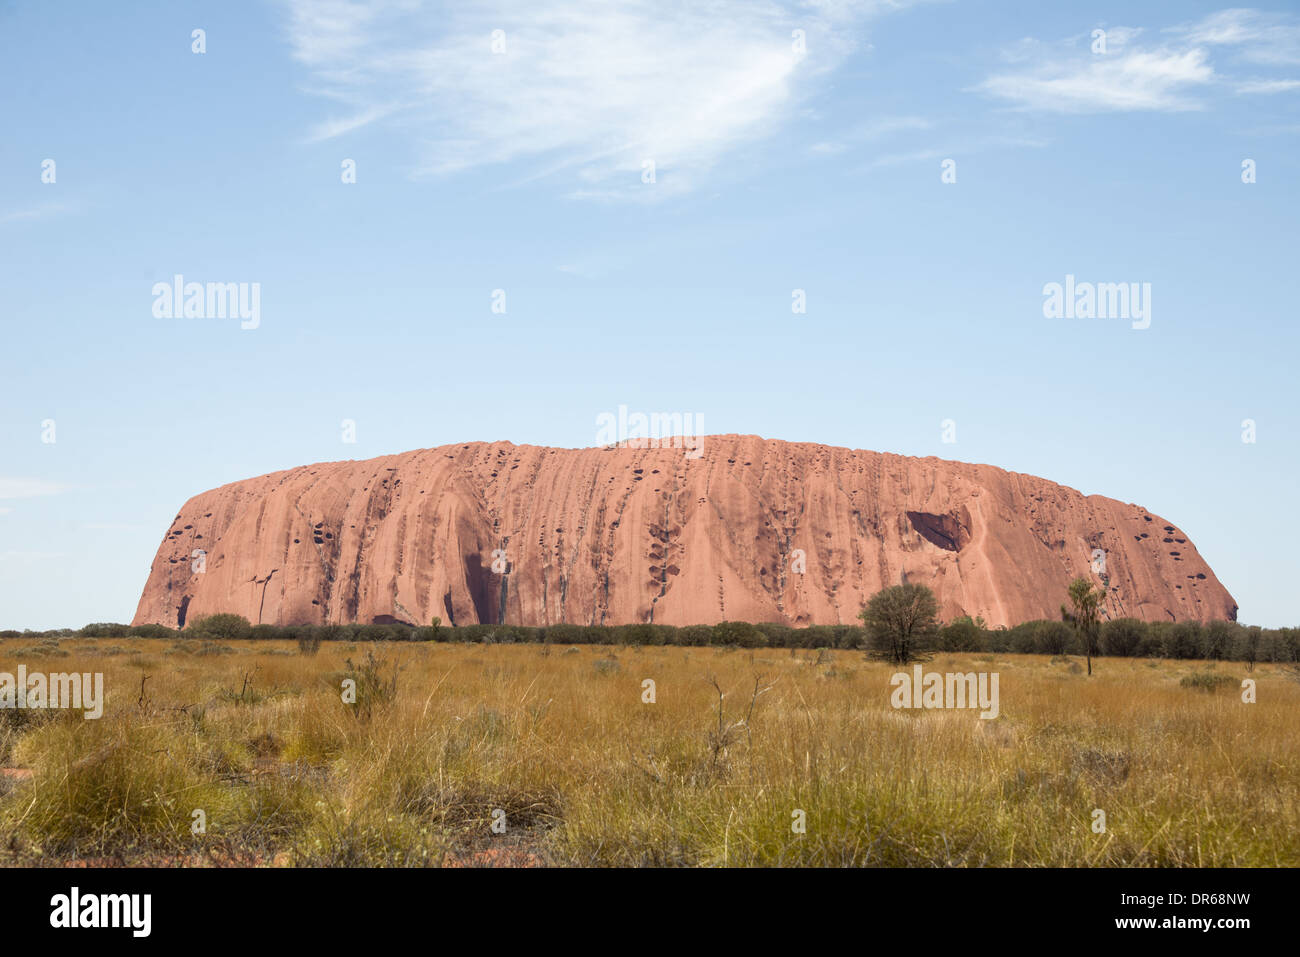 ayers Rock Northern Territory Australia Uluru rock formation and close ups Portrait blue sky grass foreground Stock Photo